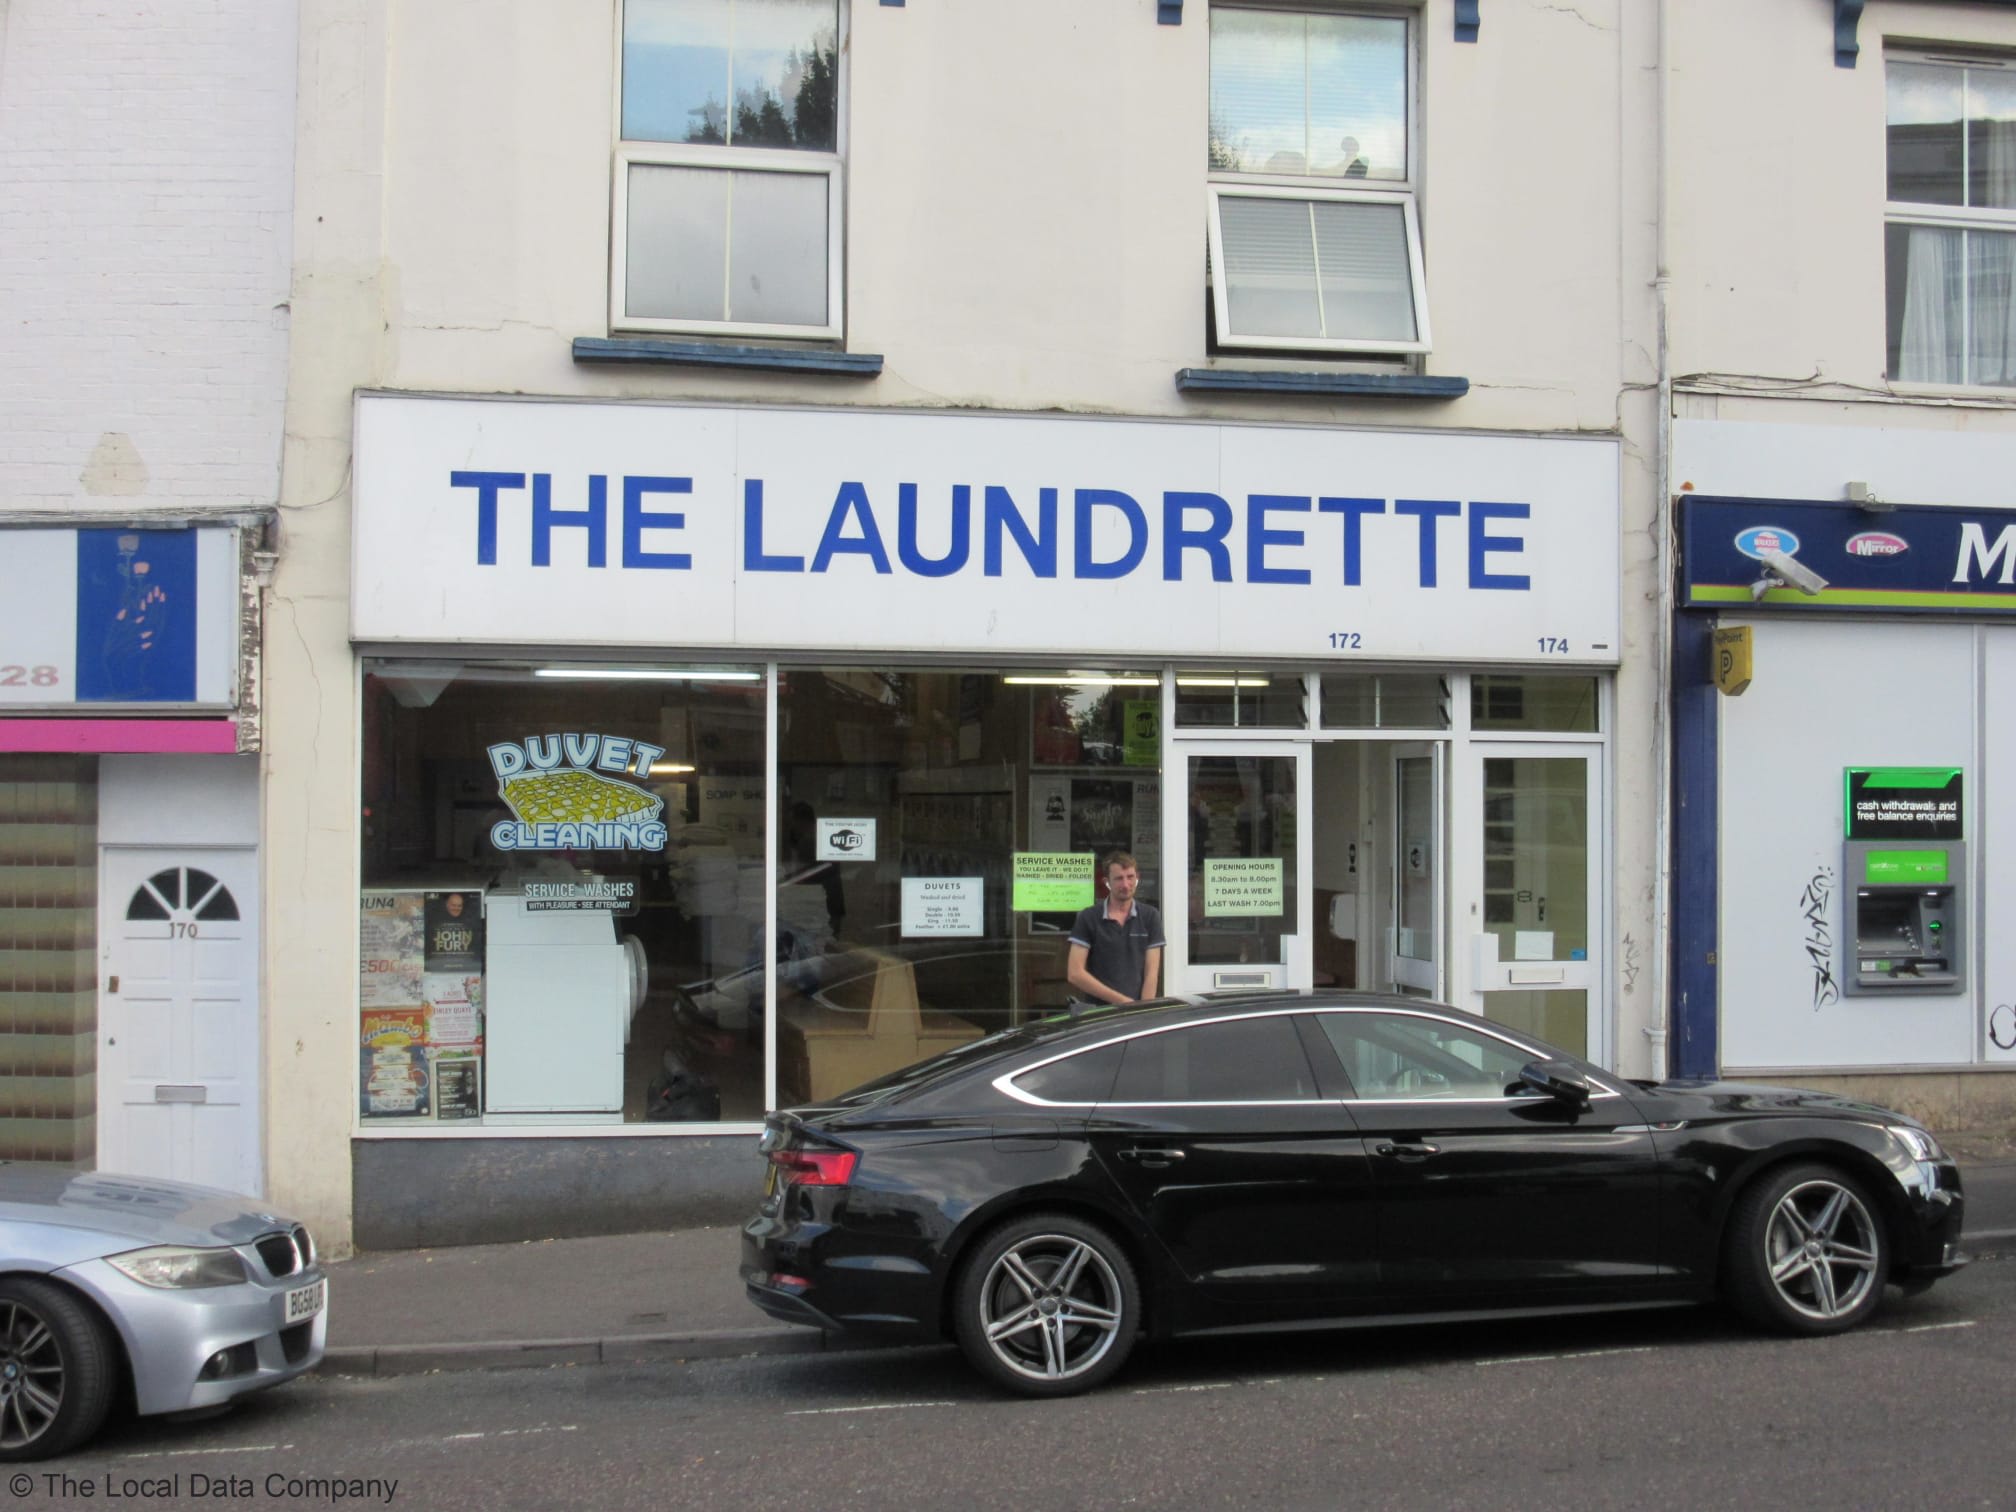 Images The Launderette